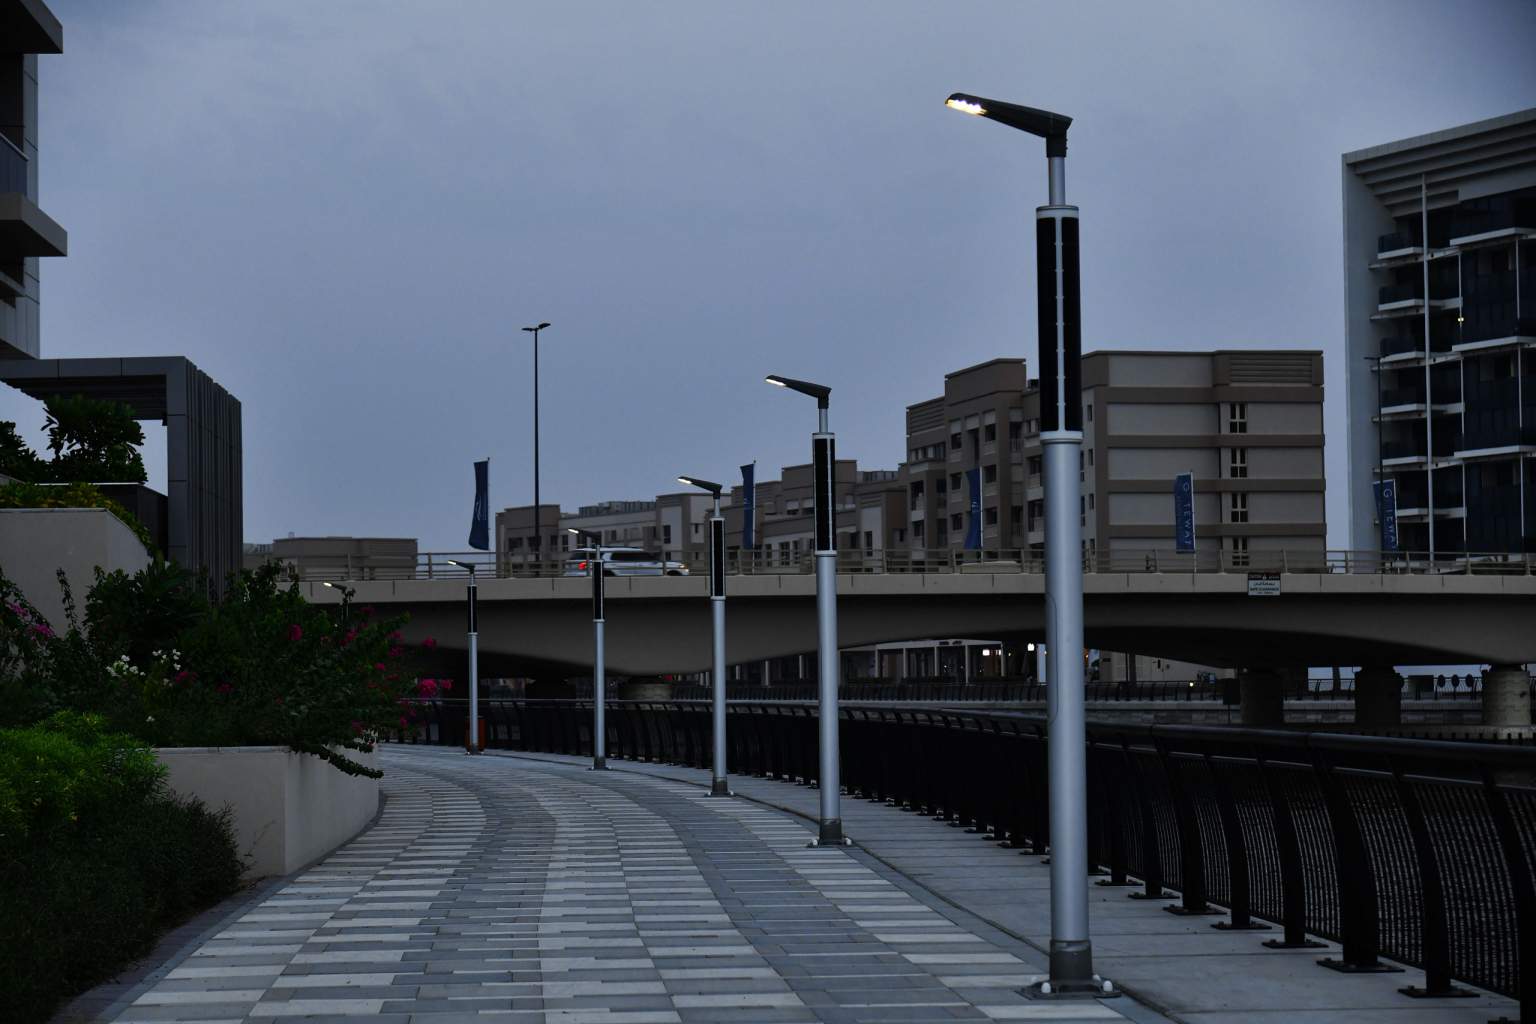 Soluxio boulevard lighting with solar panels